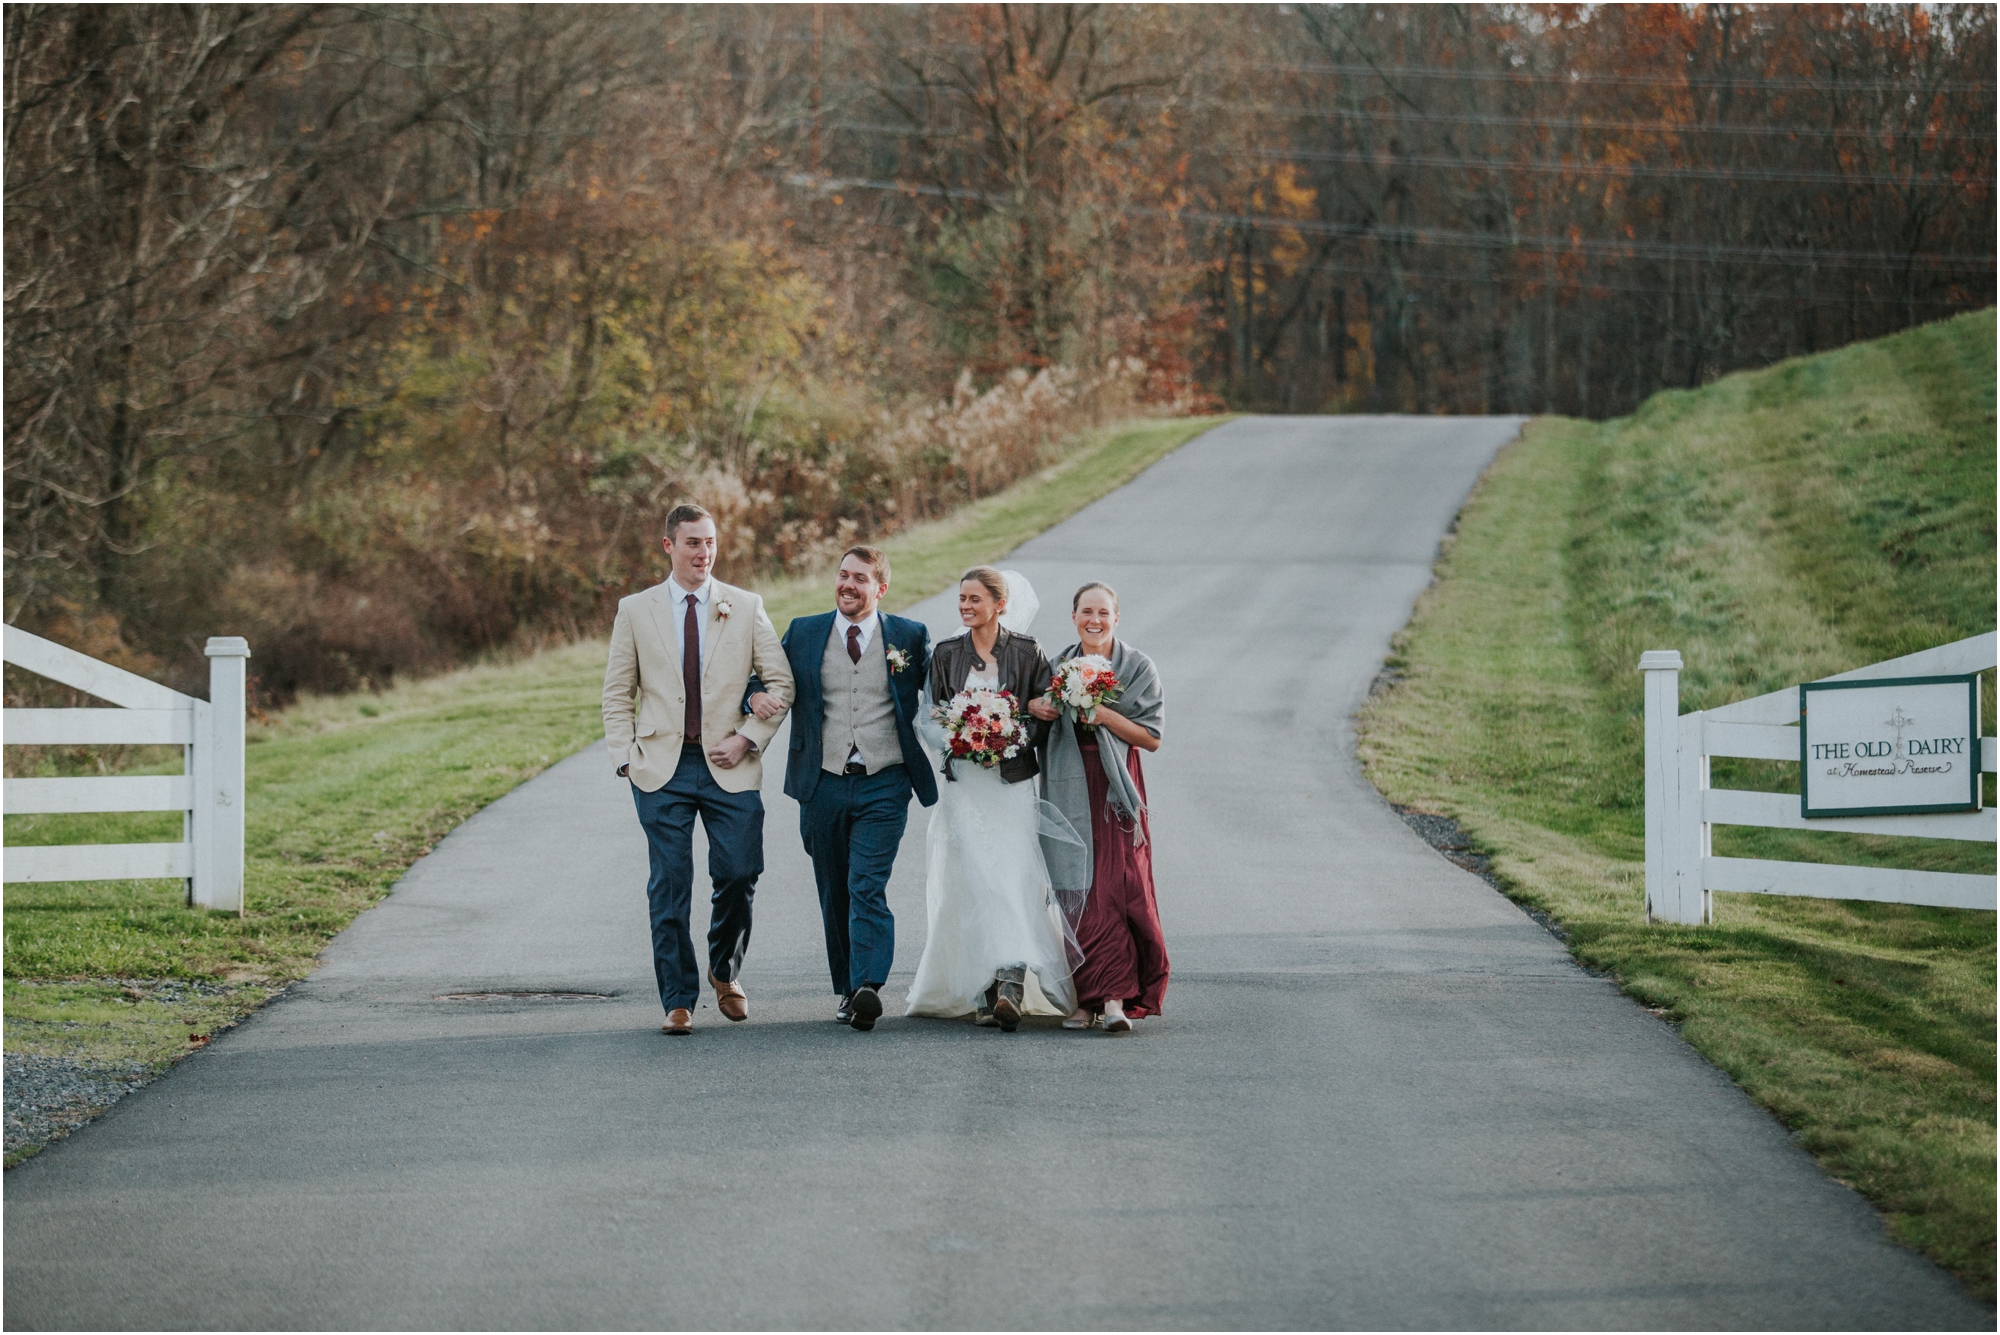 warm-springs-old-dairy-virginia-rustic-wedding-northeast-tennessee-elopement-adventuruous-photographer-katy-sergent_0066.jpg